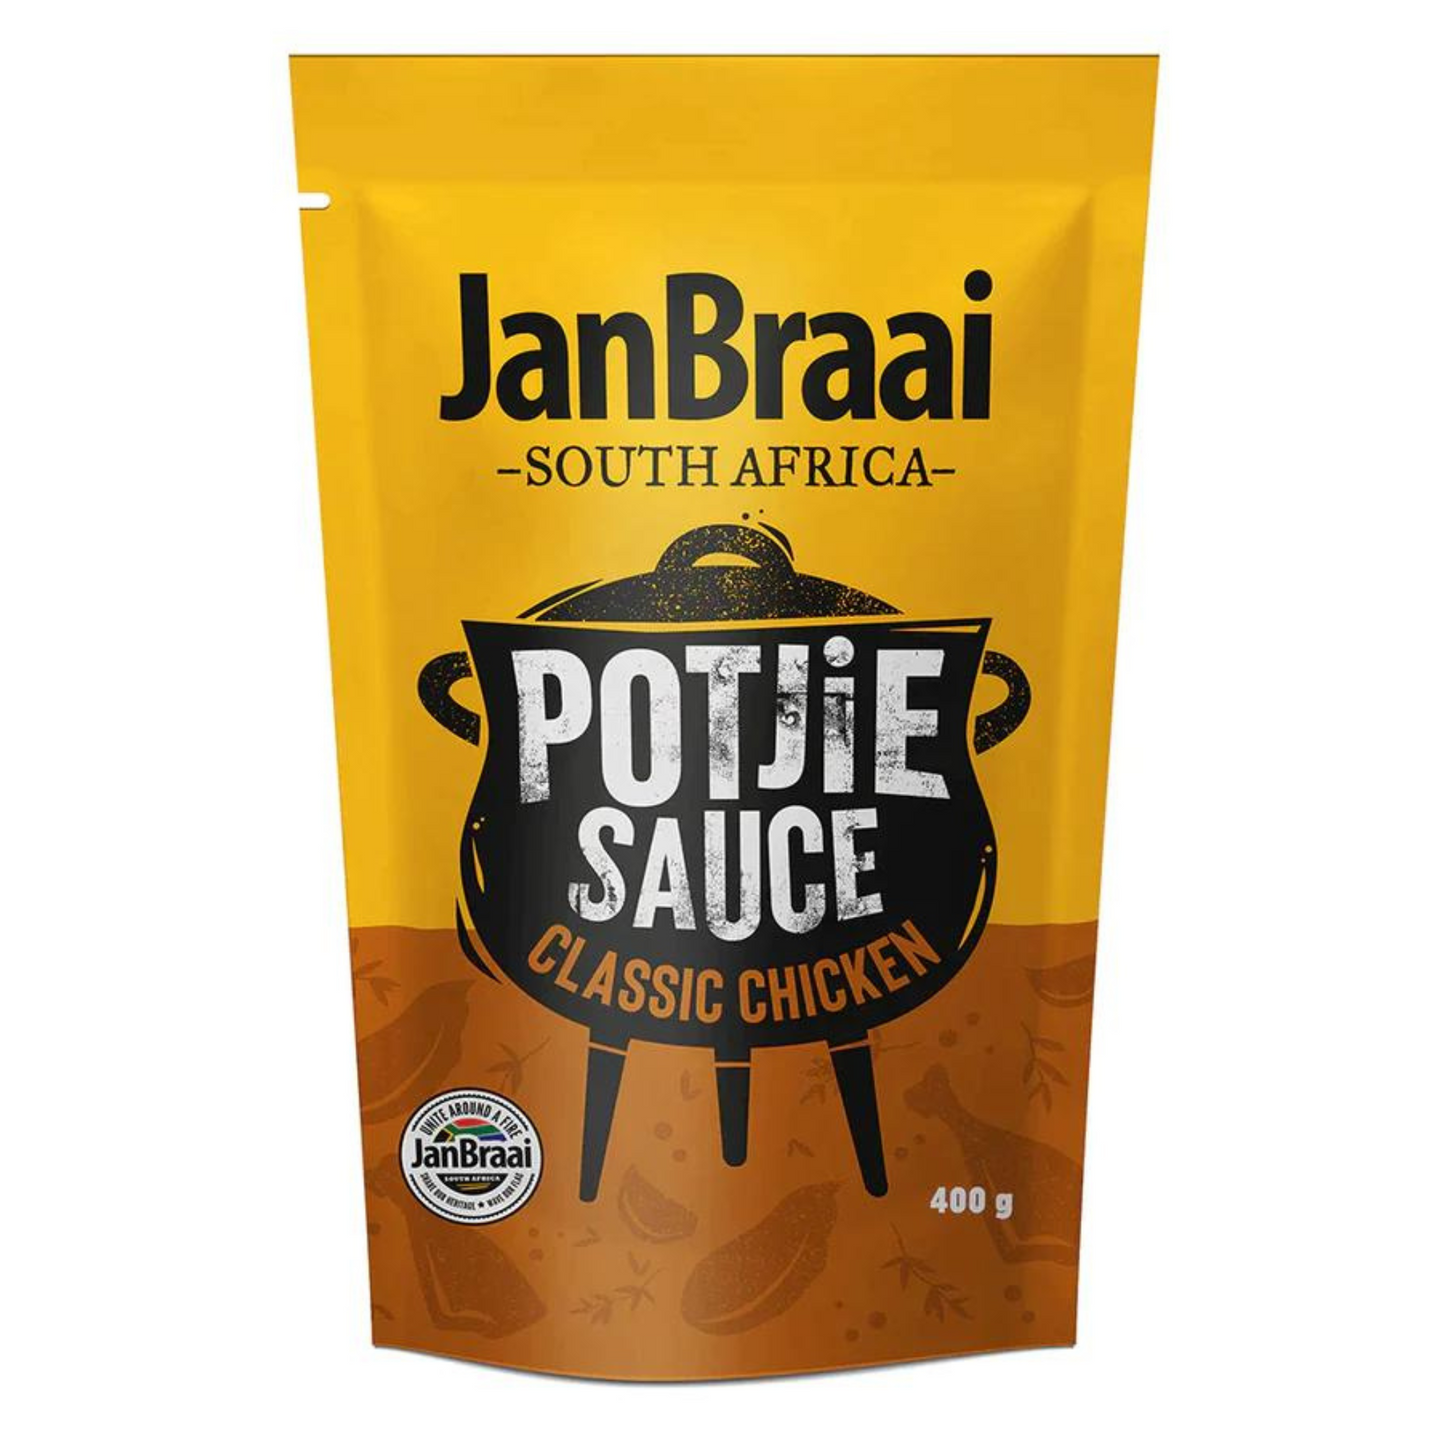 Jan Braai Classic Chicken Potjie Sauce